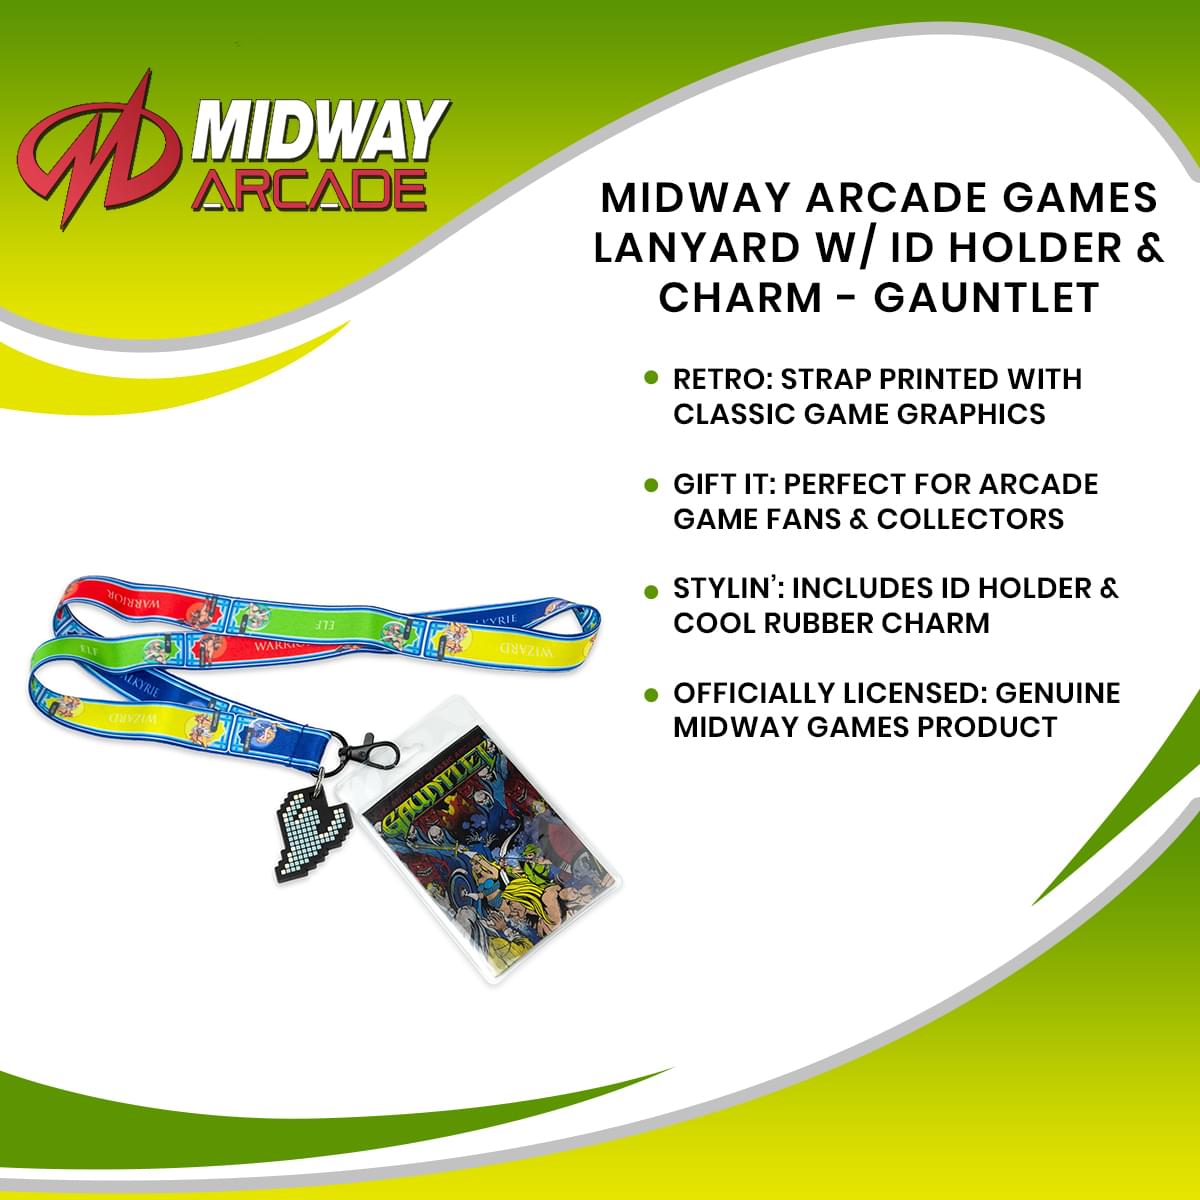 Midway Arcade Games Lanyard w/ ID Holder & Charm - Gauntlet